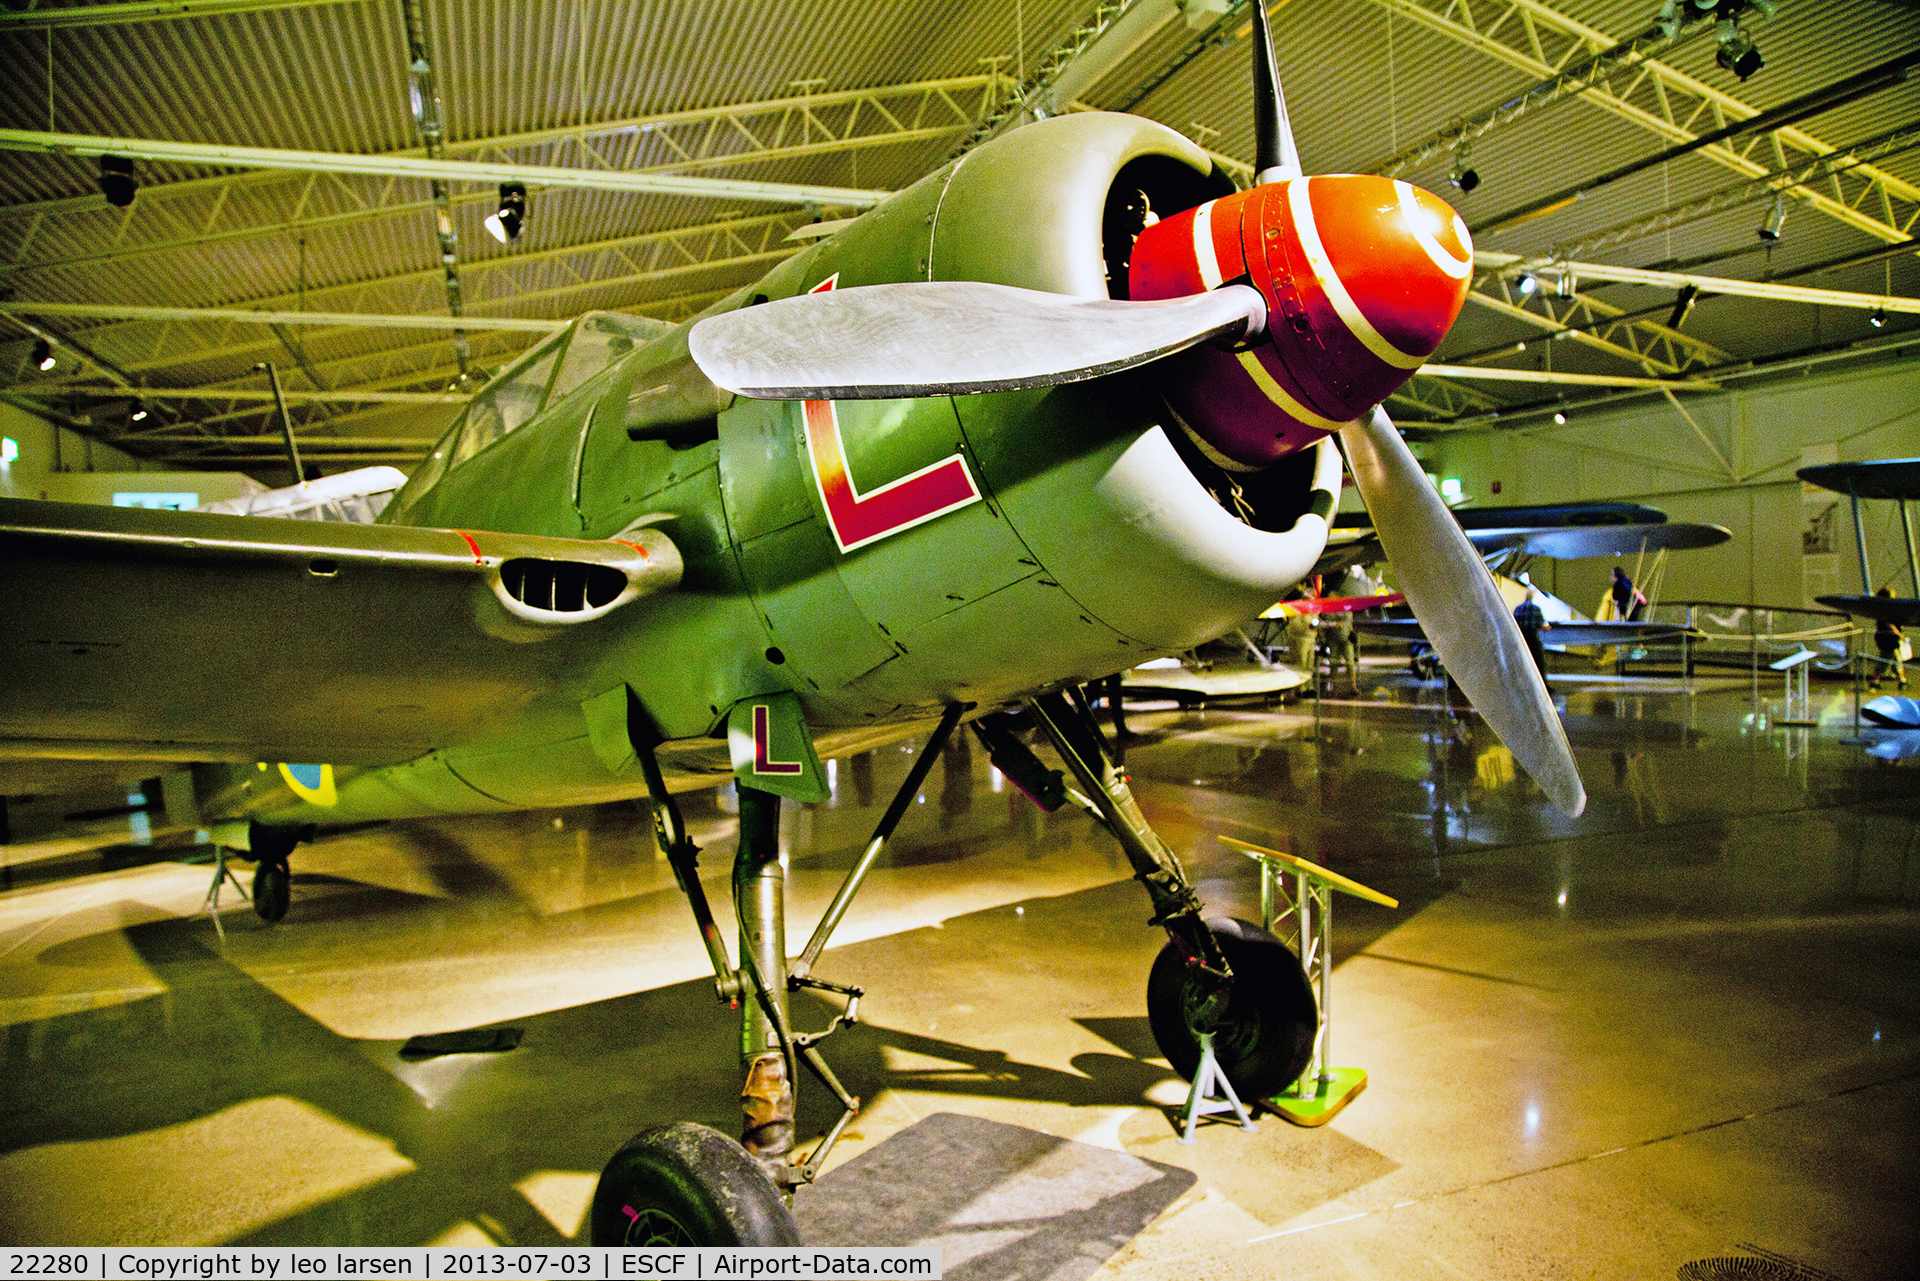 22280, 1944 FFVS J-22A C/N 22280, Flygvapen Museum Linkoping 3.7.13